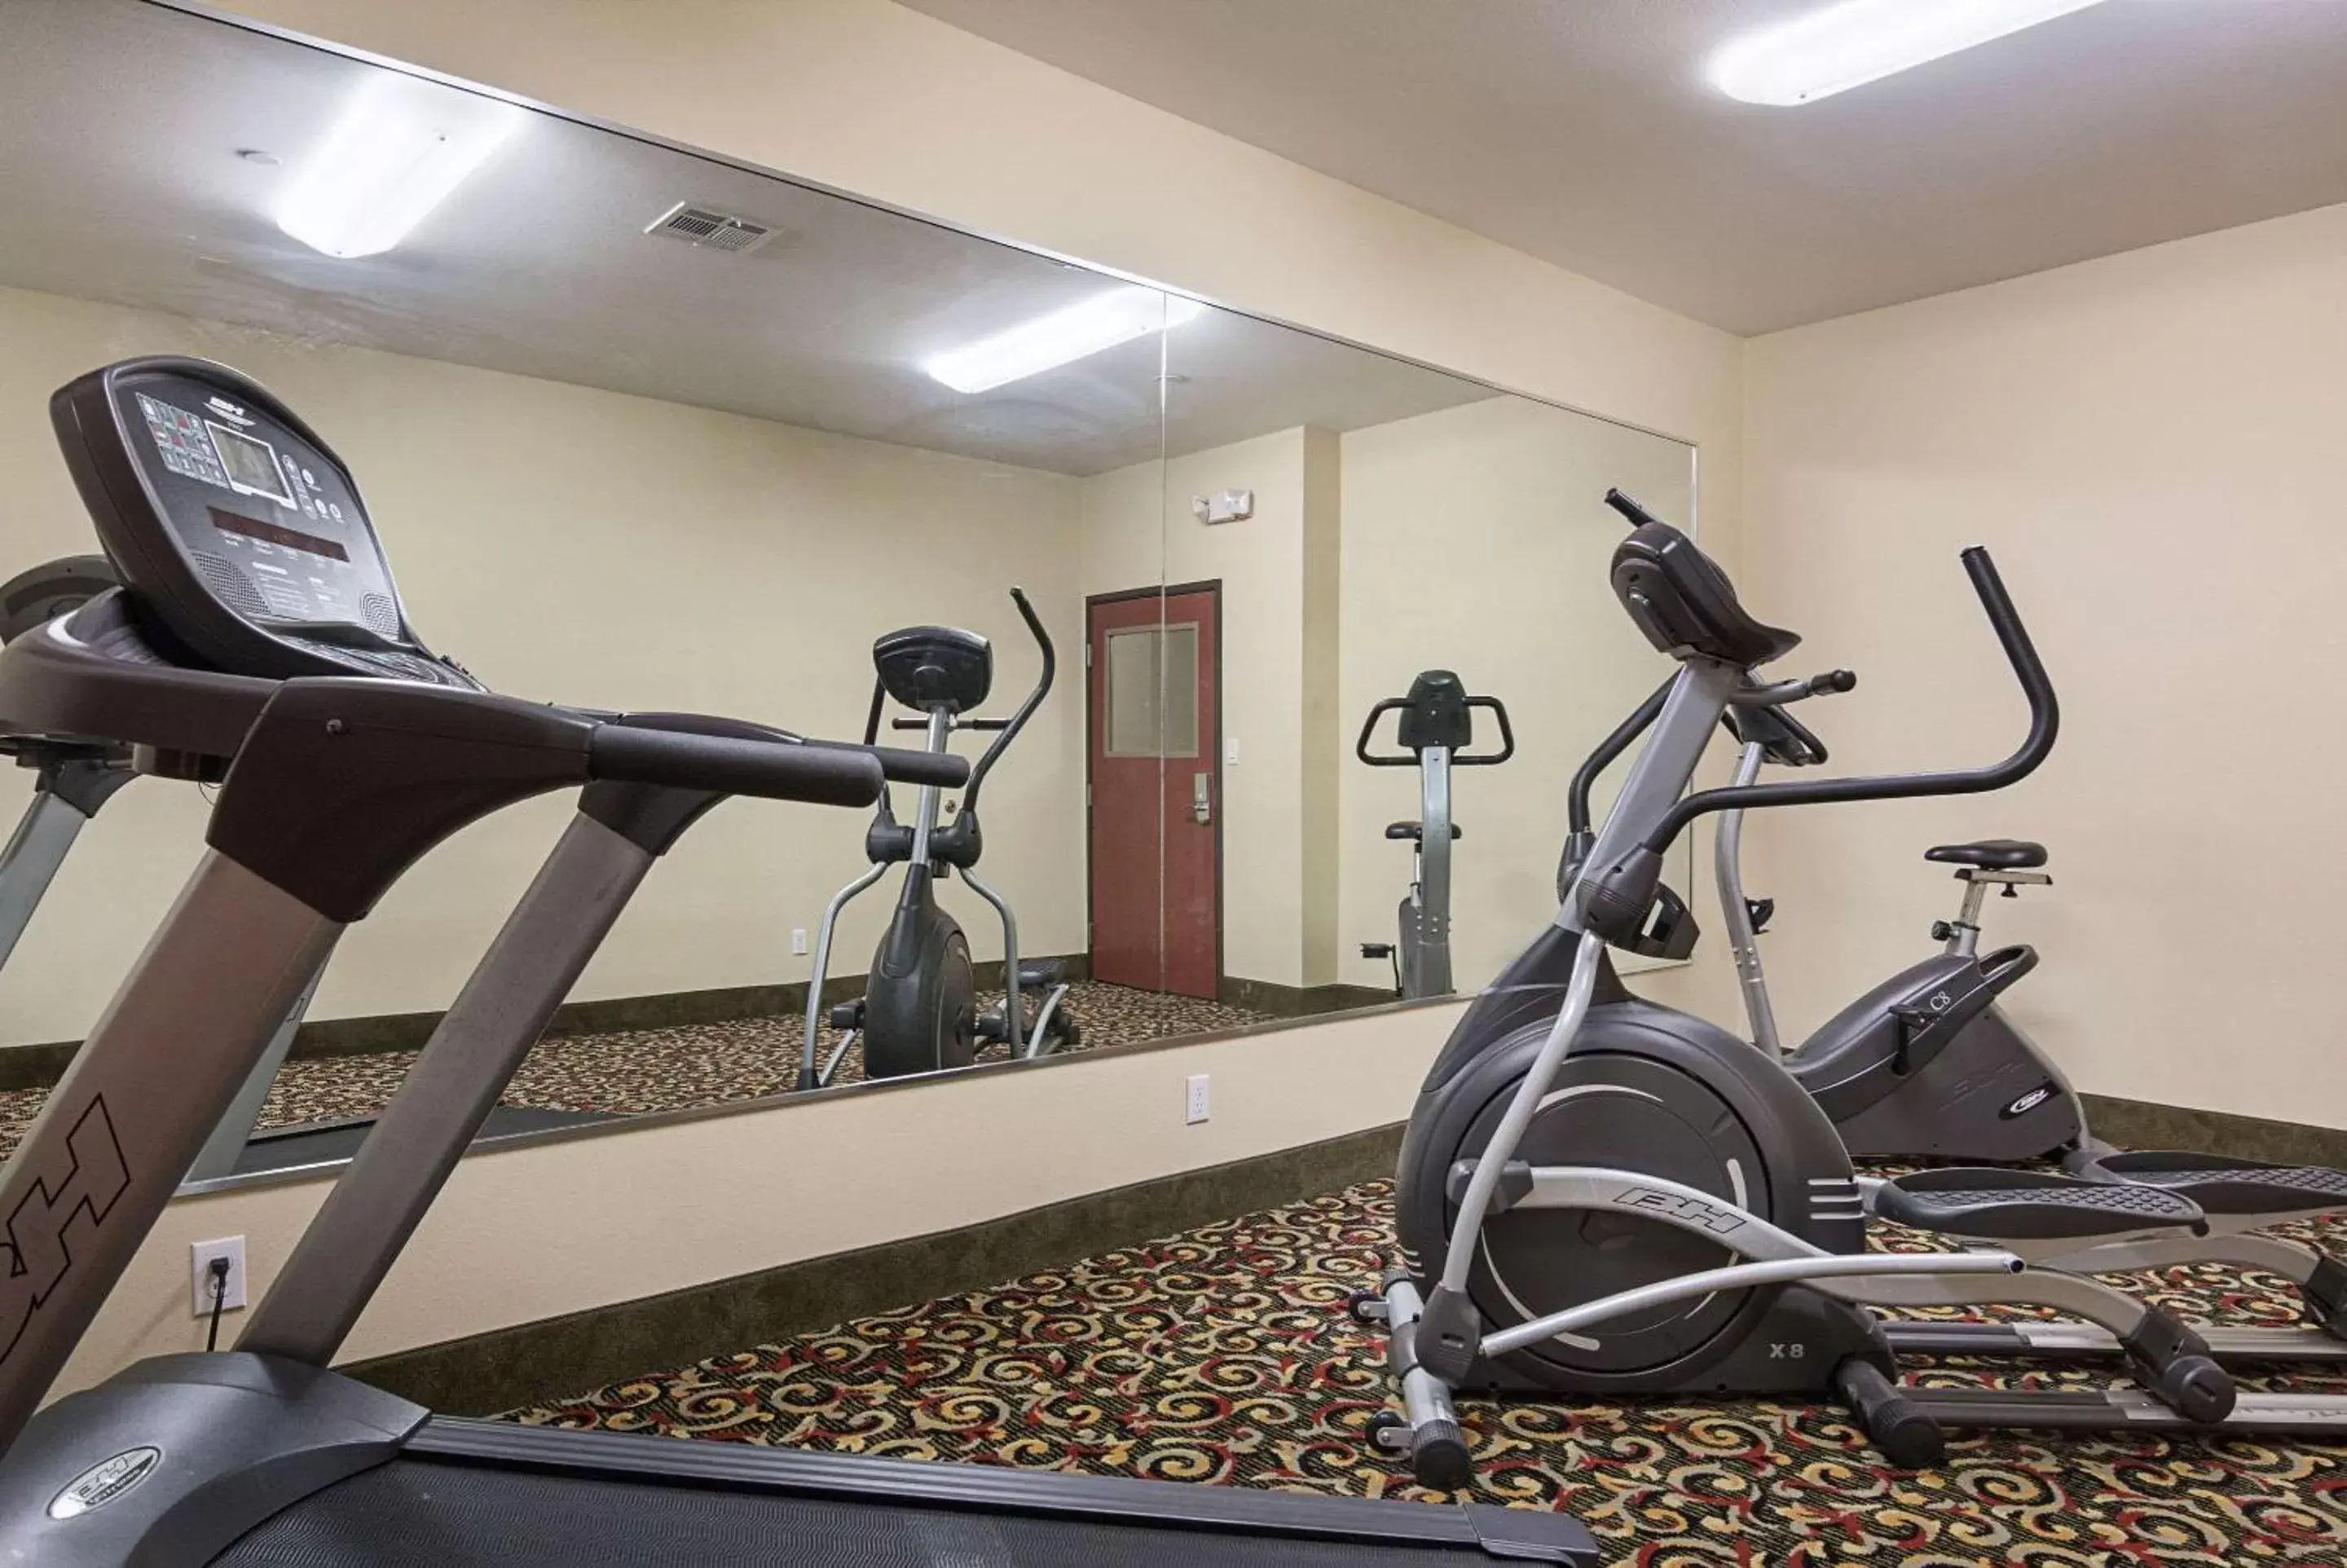 Fitness centre/facilities, Fitness Center/Facilities in Rodeway Inn Winnfield